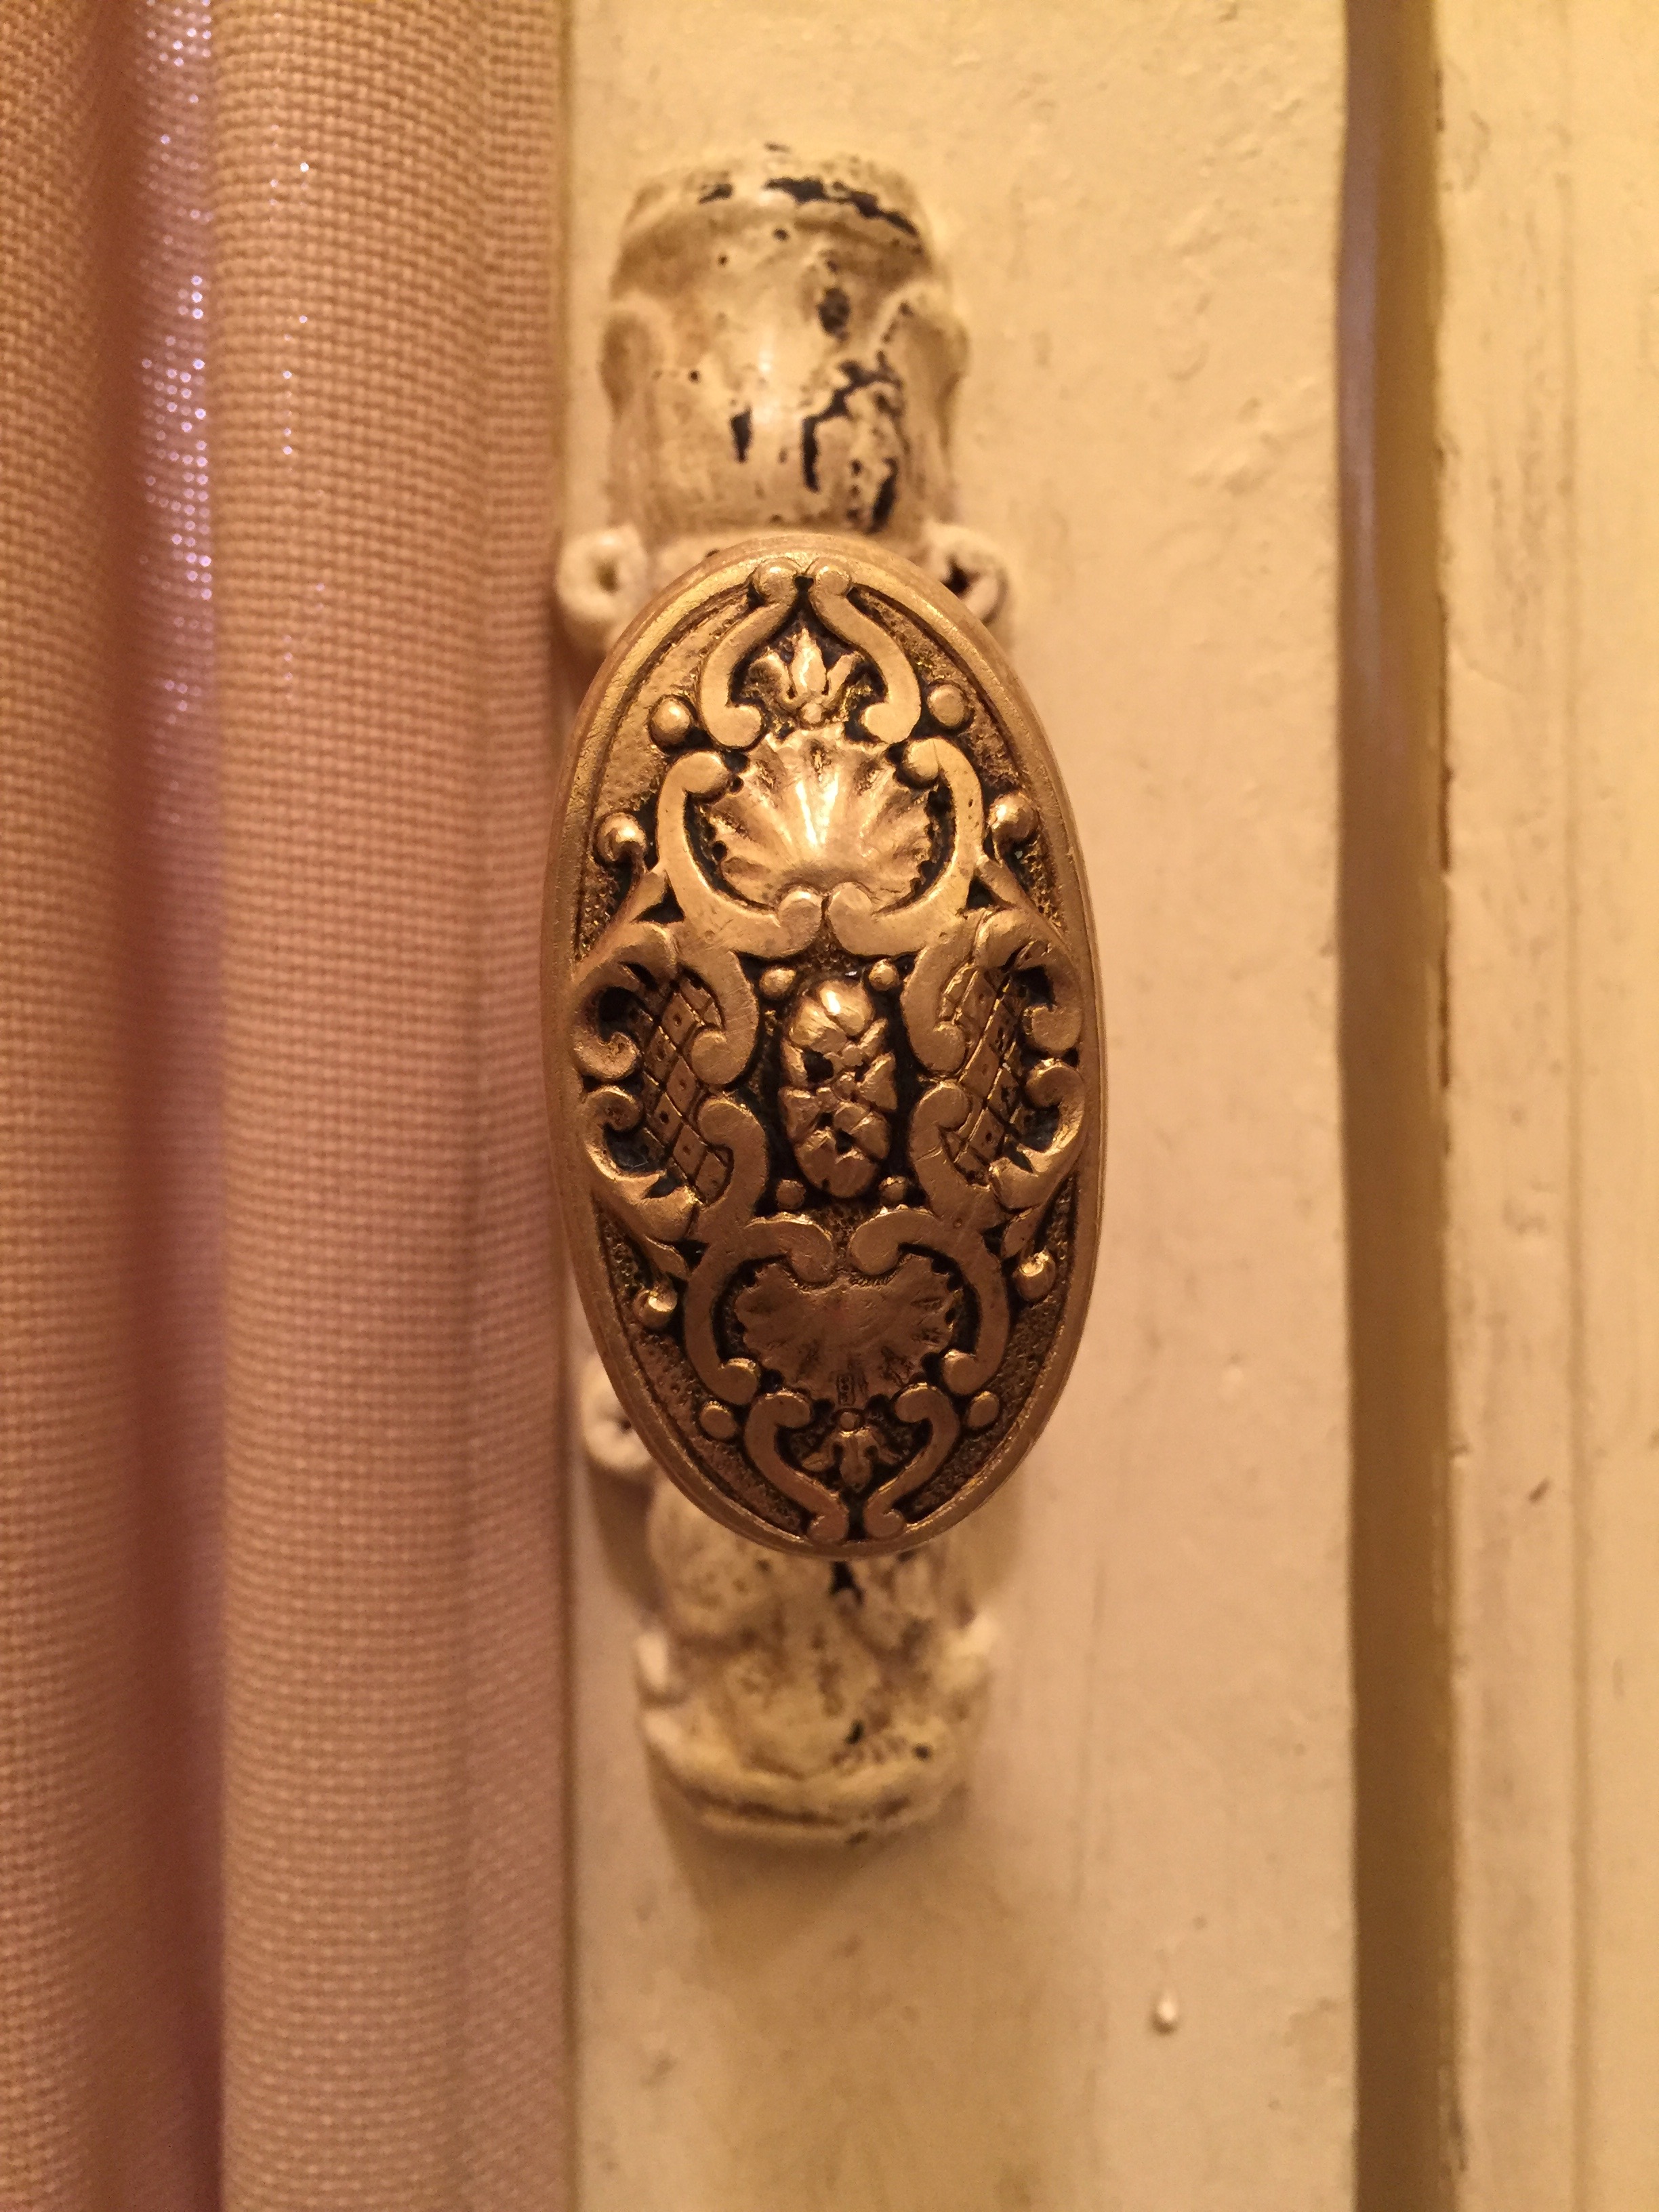 It's the weekend! Number 58, Detailed Doorknob at Prune in NYC